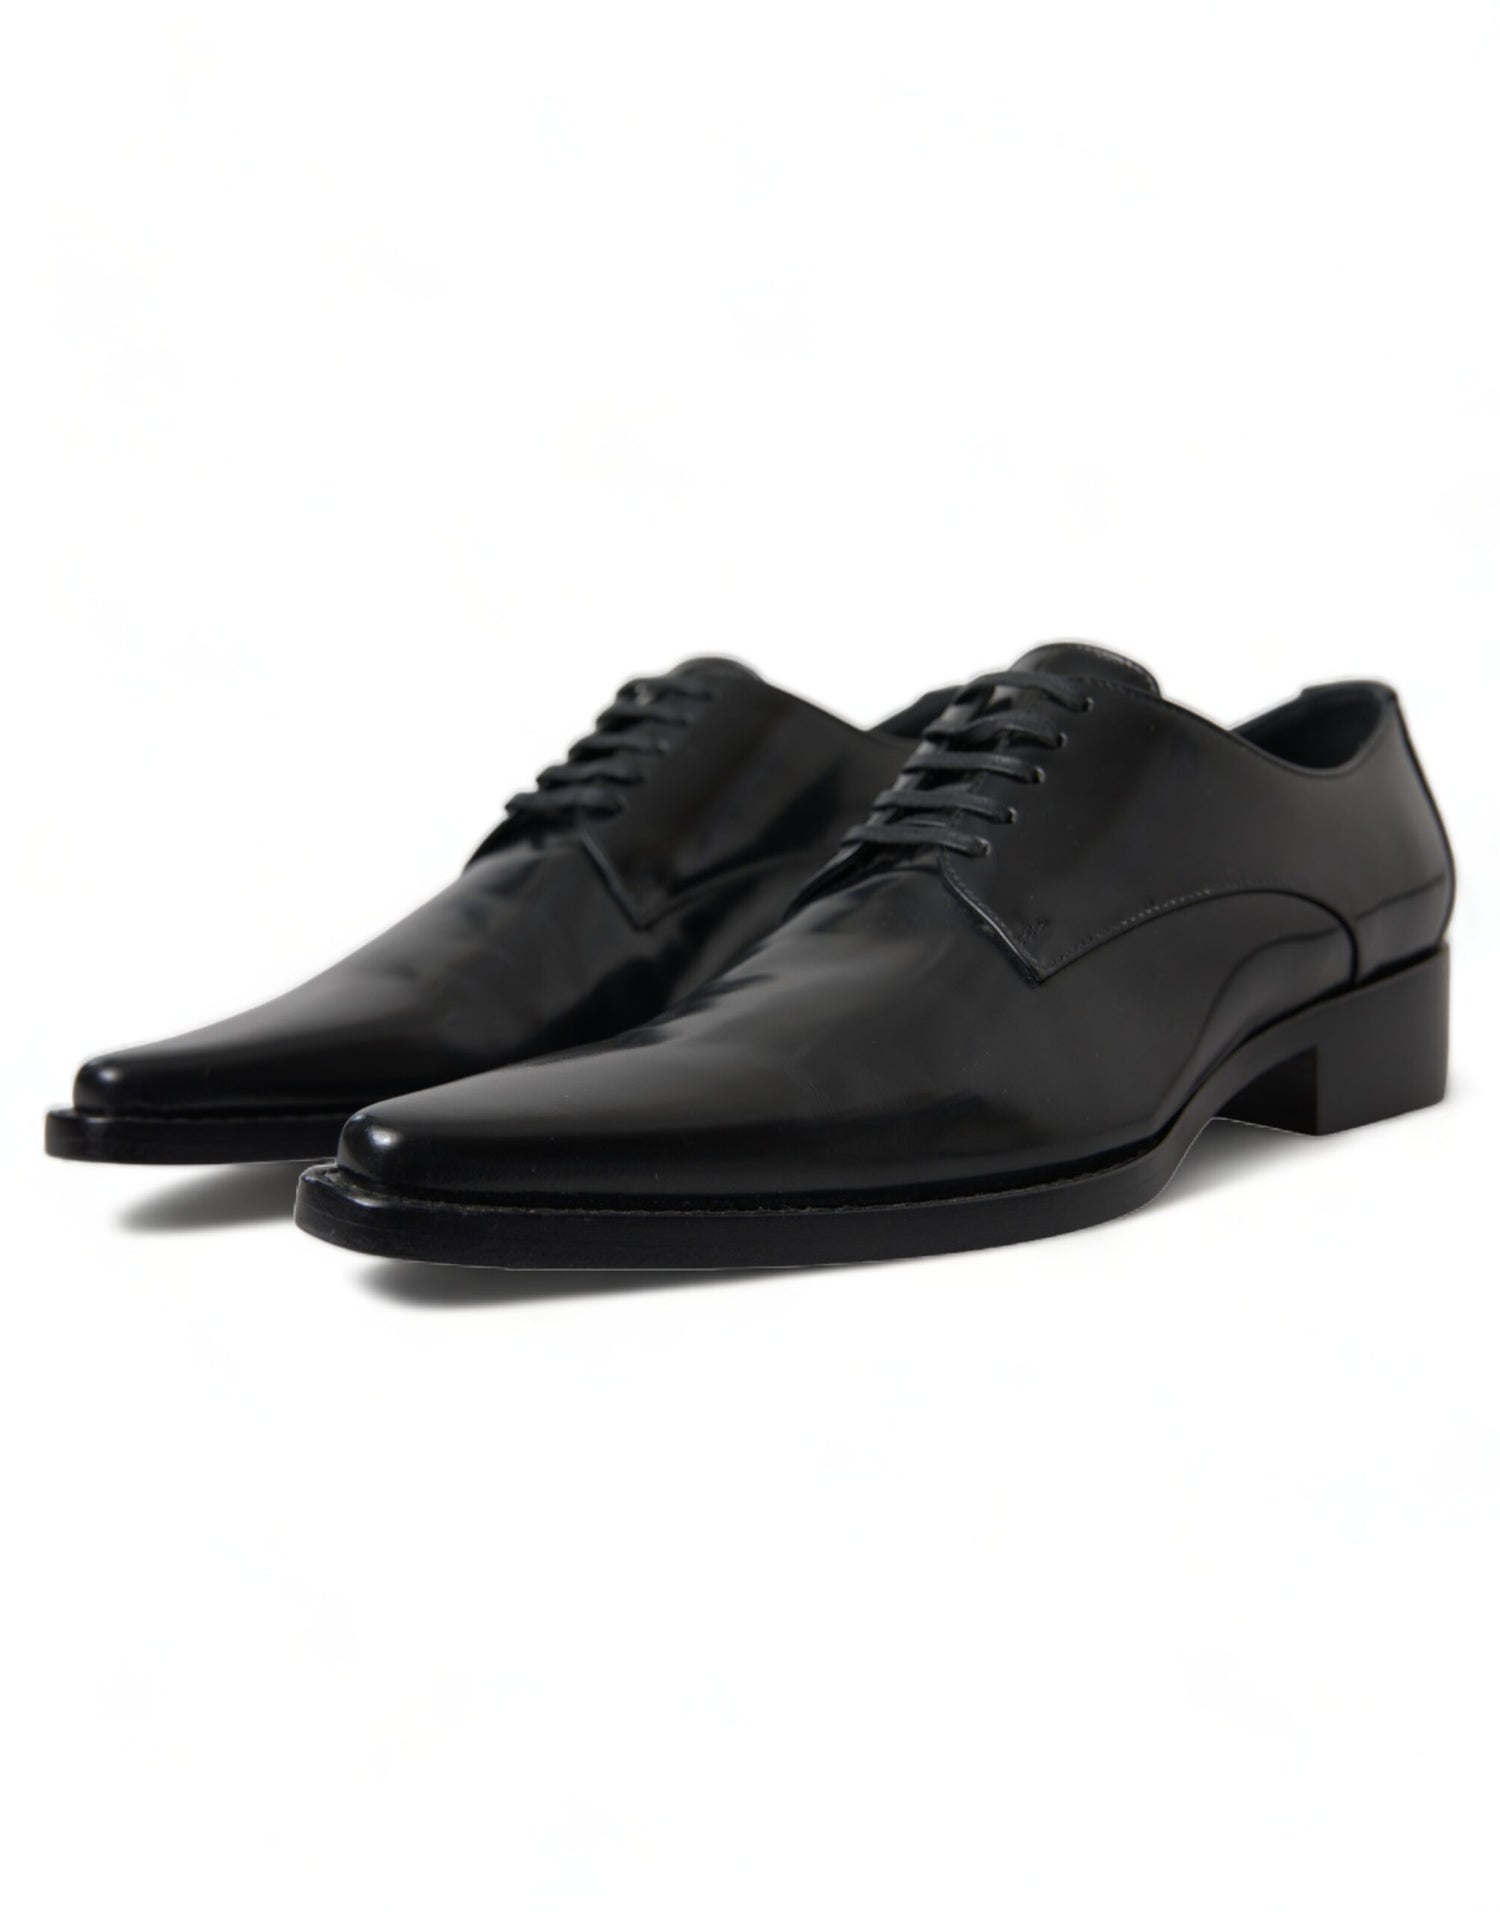 Dolce & Gabbana Black Leather Lace Up Formal Flats Shoes - DEA STILOSA MILANO